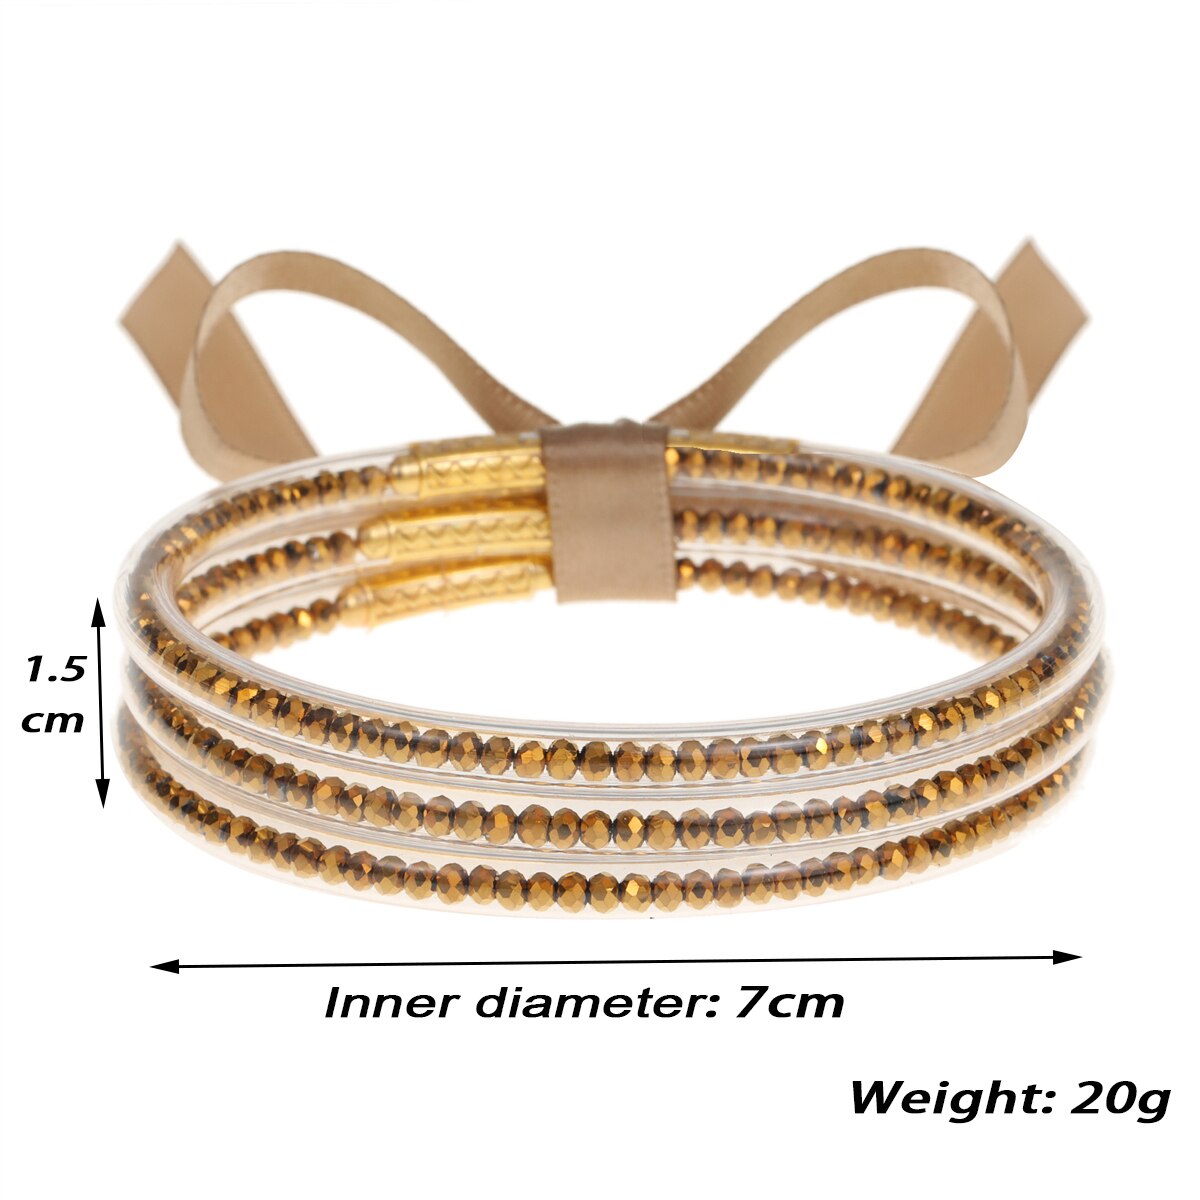 Fashion Glitter Jelly Bangles Bracelets Glitter Filled Jelly Silicone Bracelets for Women Girls Party Jewellery